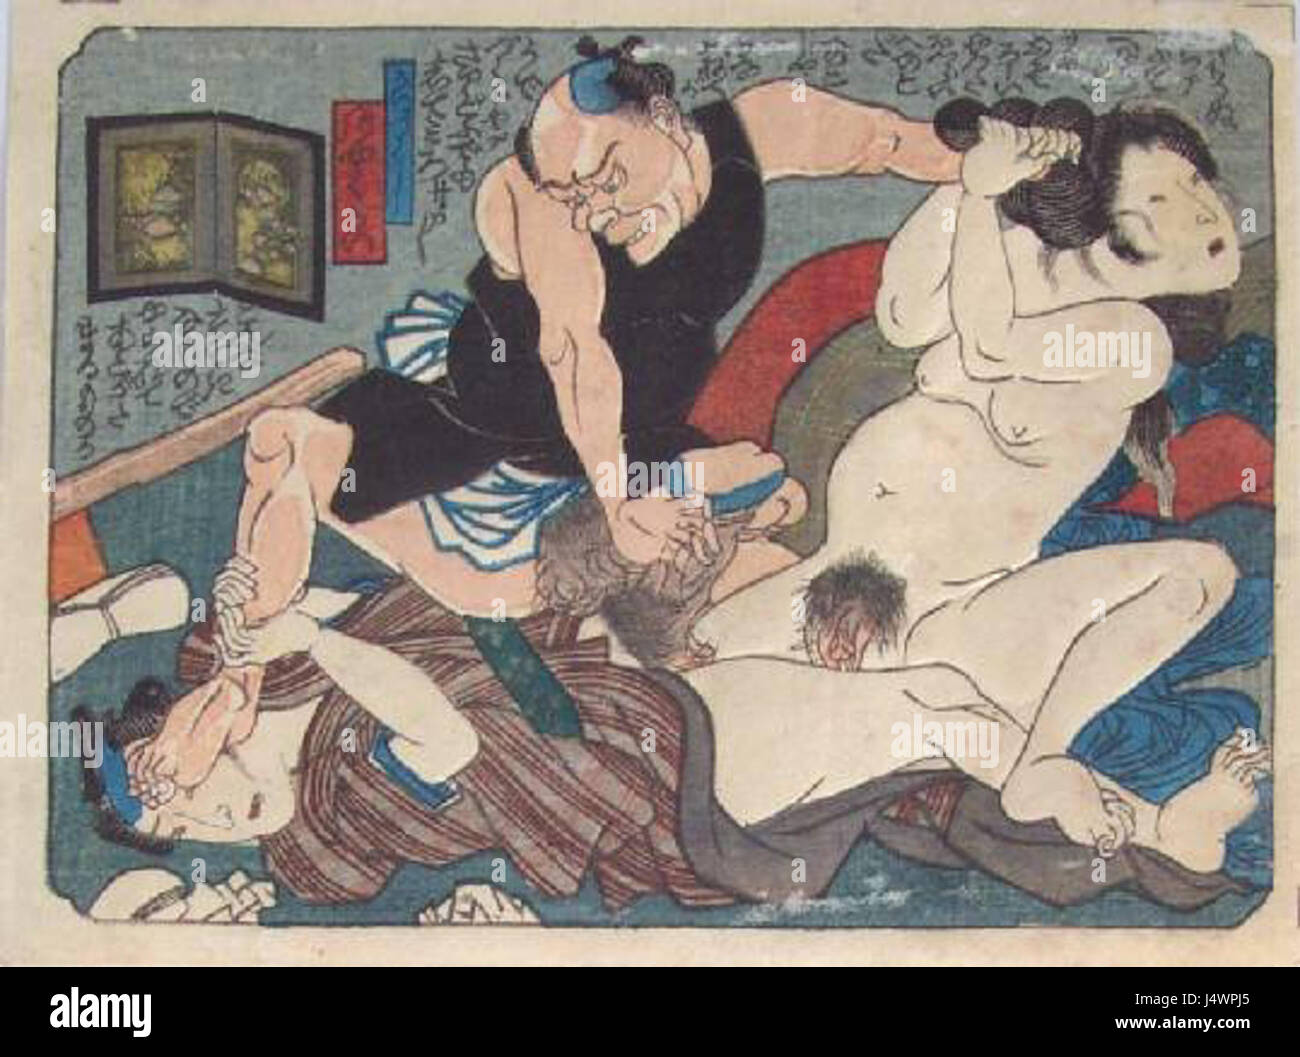 древняя эротика японии фото 17